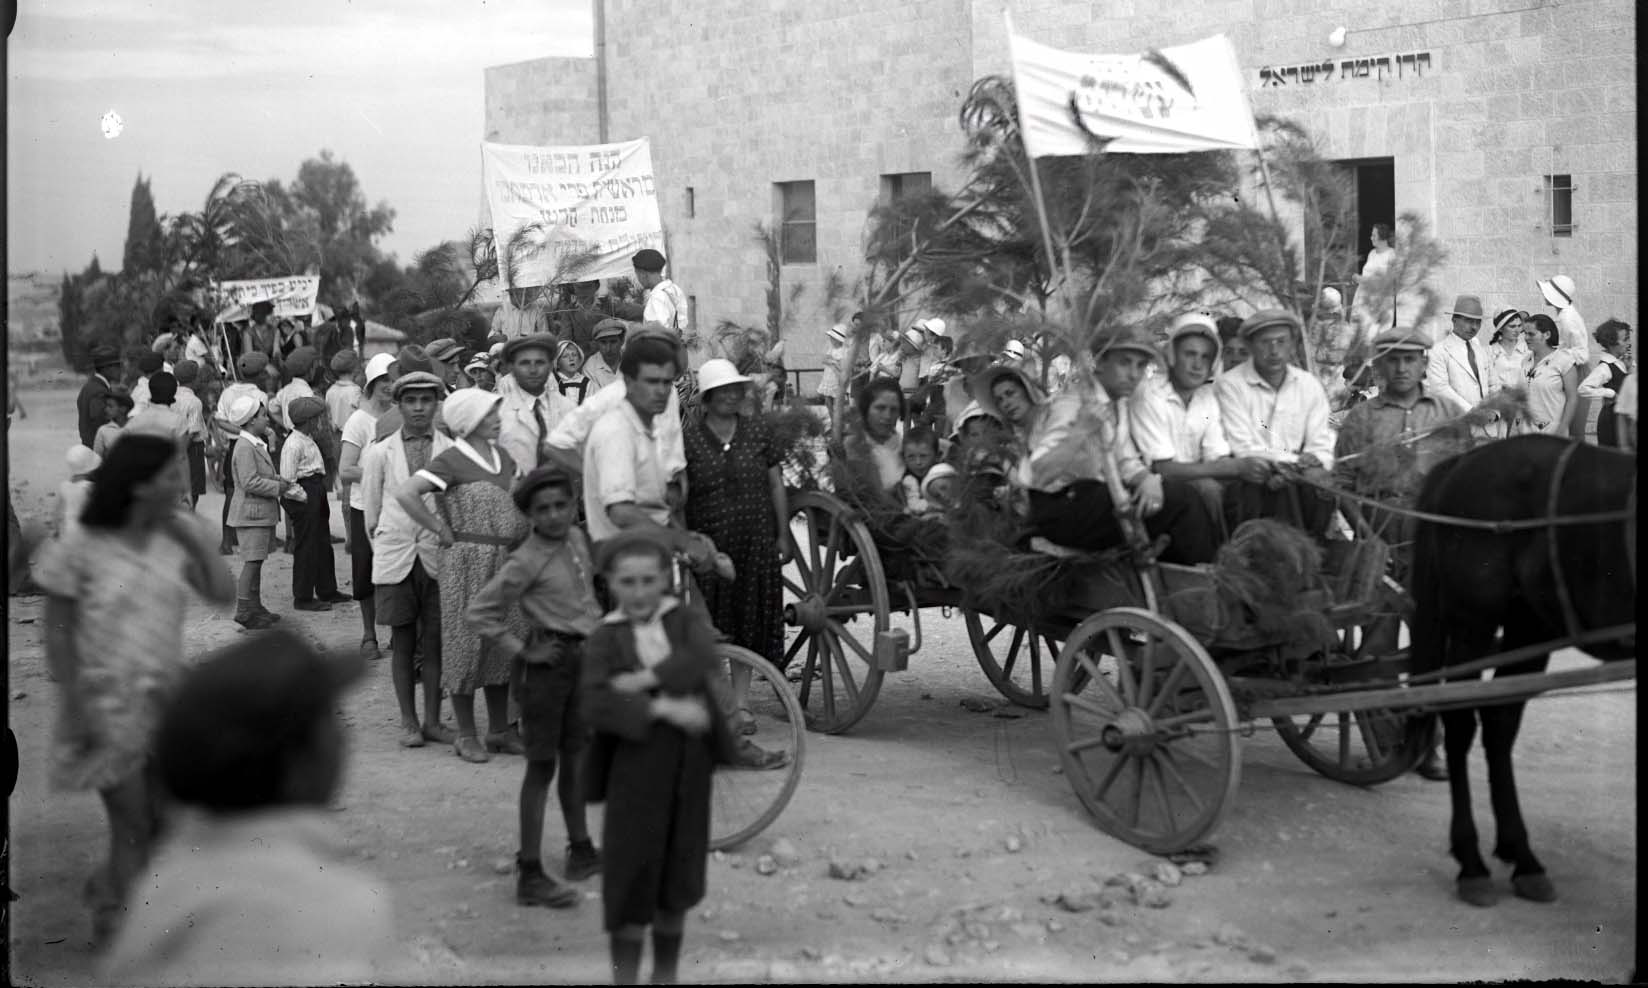 Bringing of the first fruits to the KKL-JNF building in Jerusalem, 1931. Photo by Yosef Schweig.